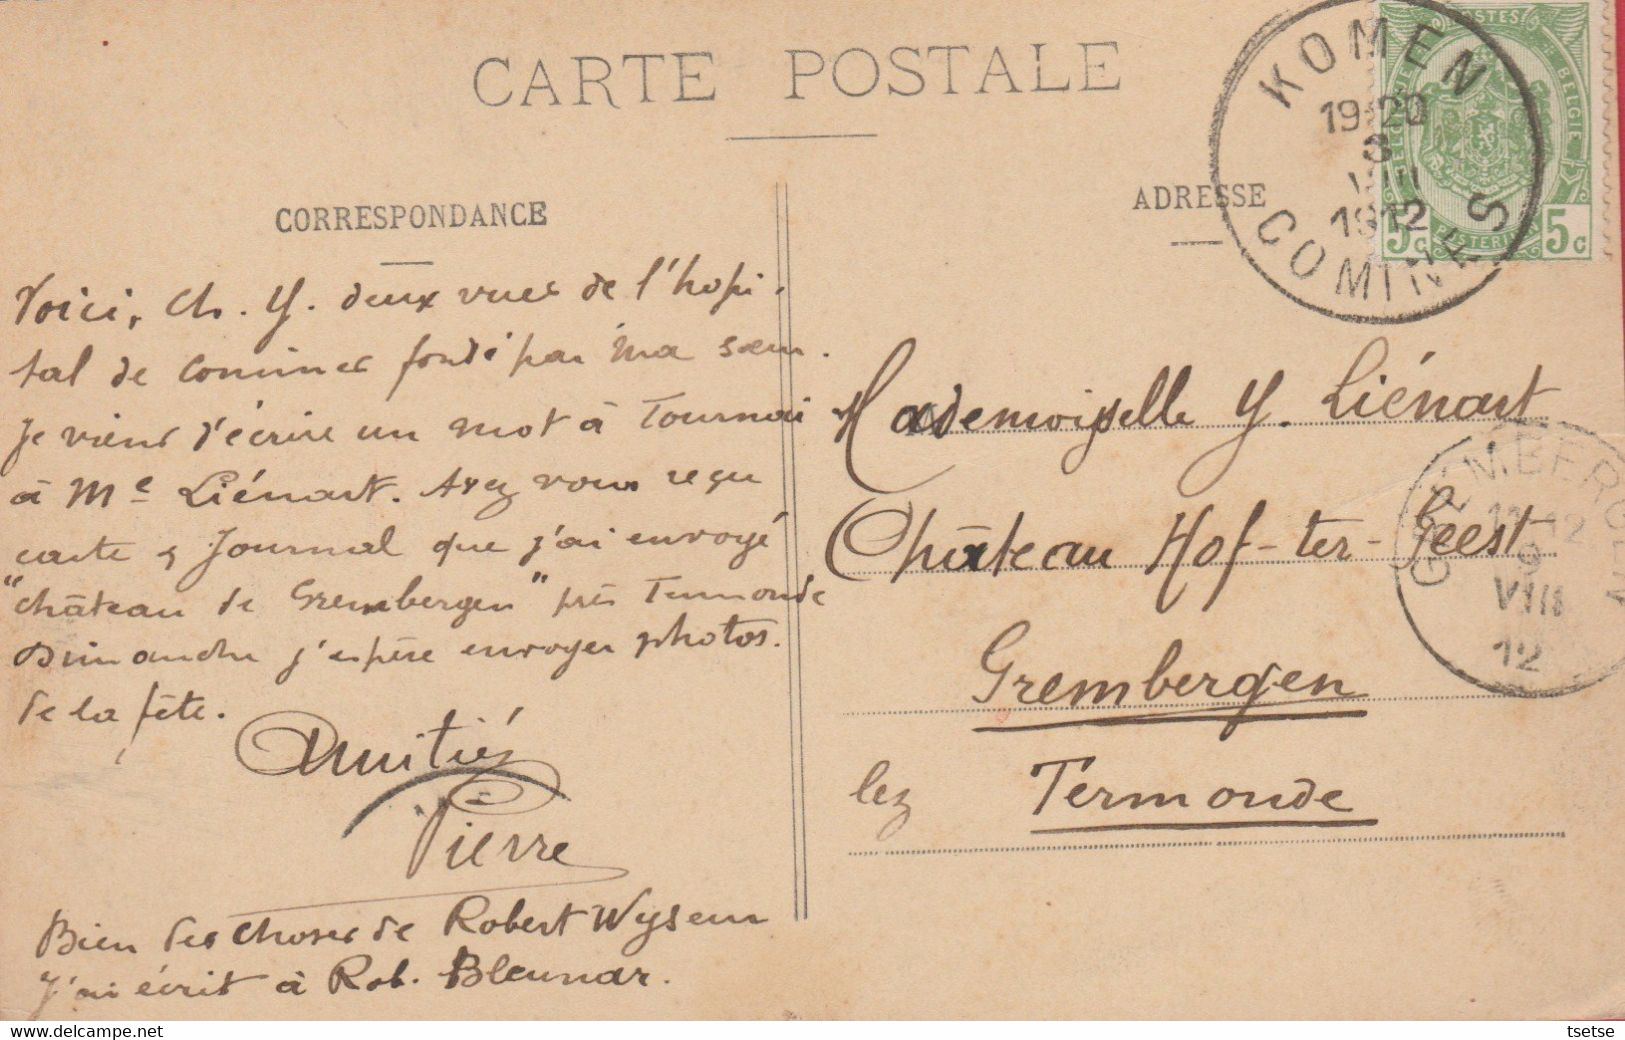 Comines - L'Hôpital ... Chapelle , Dispensaire - 1912 ( Voir Verso ) - Comines-Warneton - Komen-Waasten